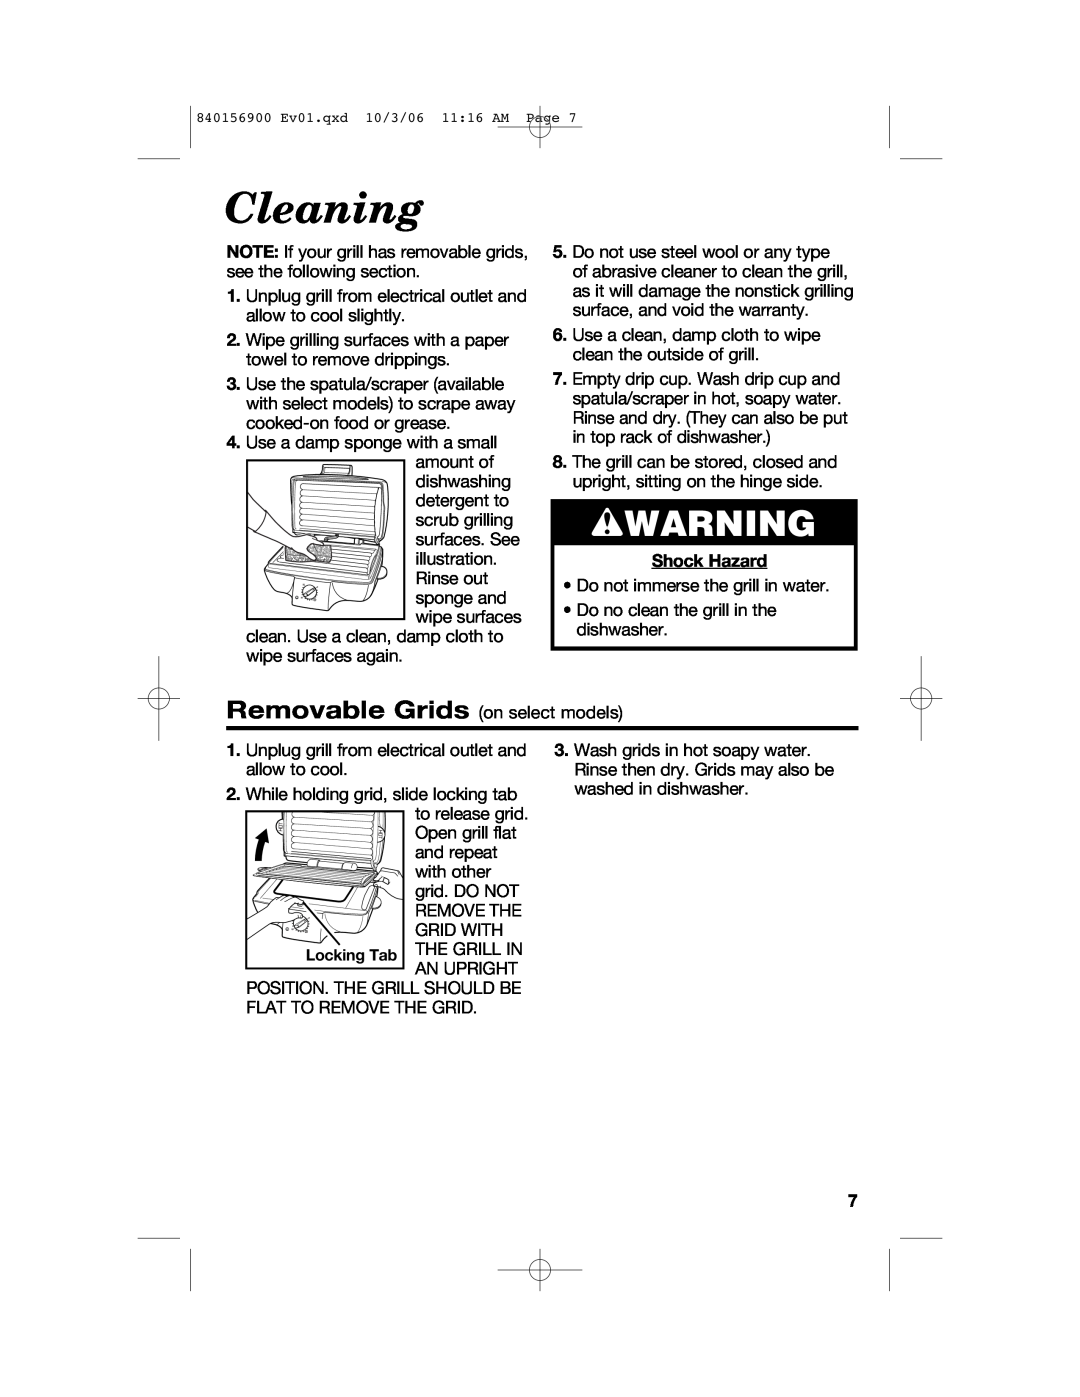 Hamilton Beach 25285 manual Cleaning, Shock Hazard, wWARNING 